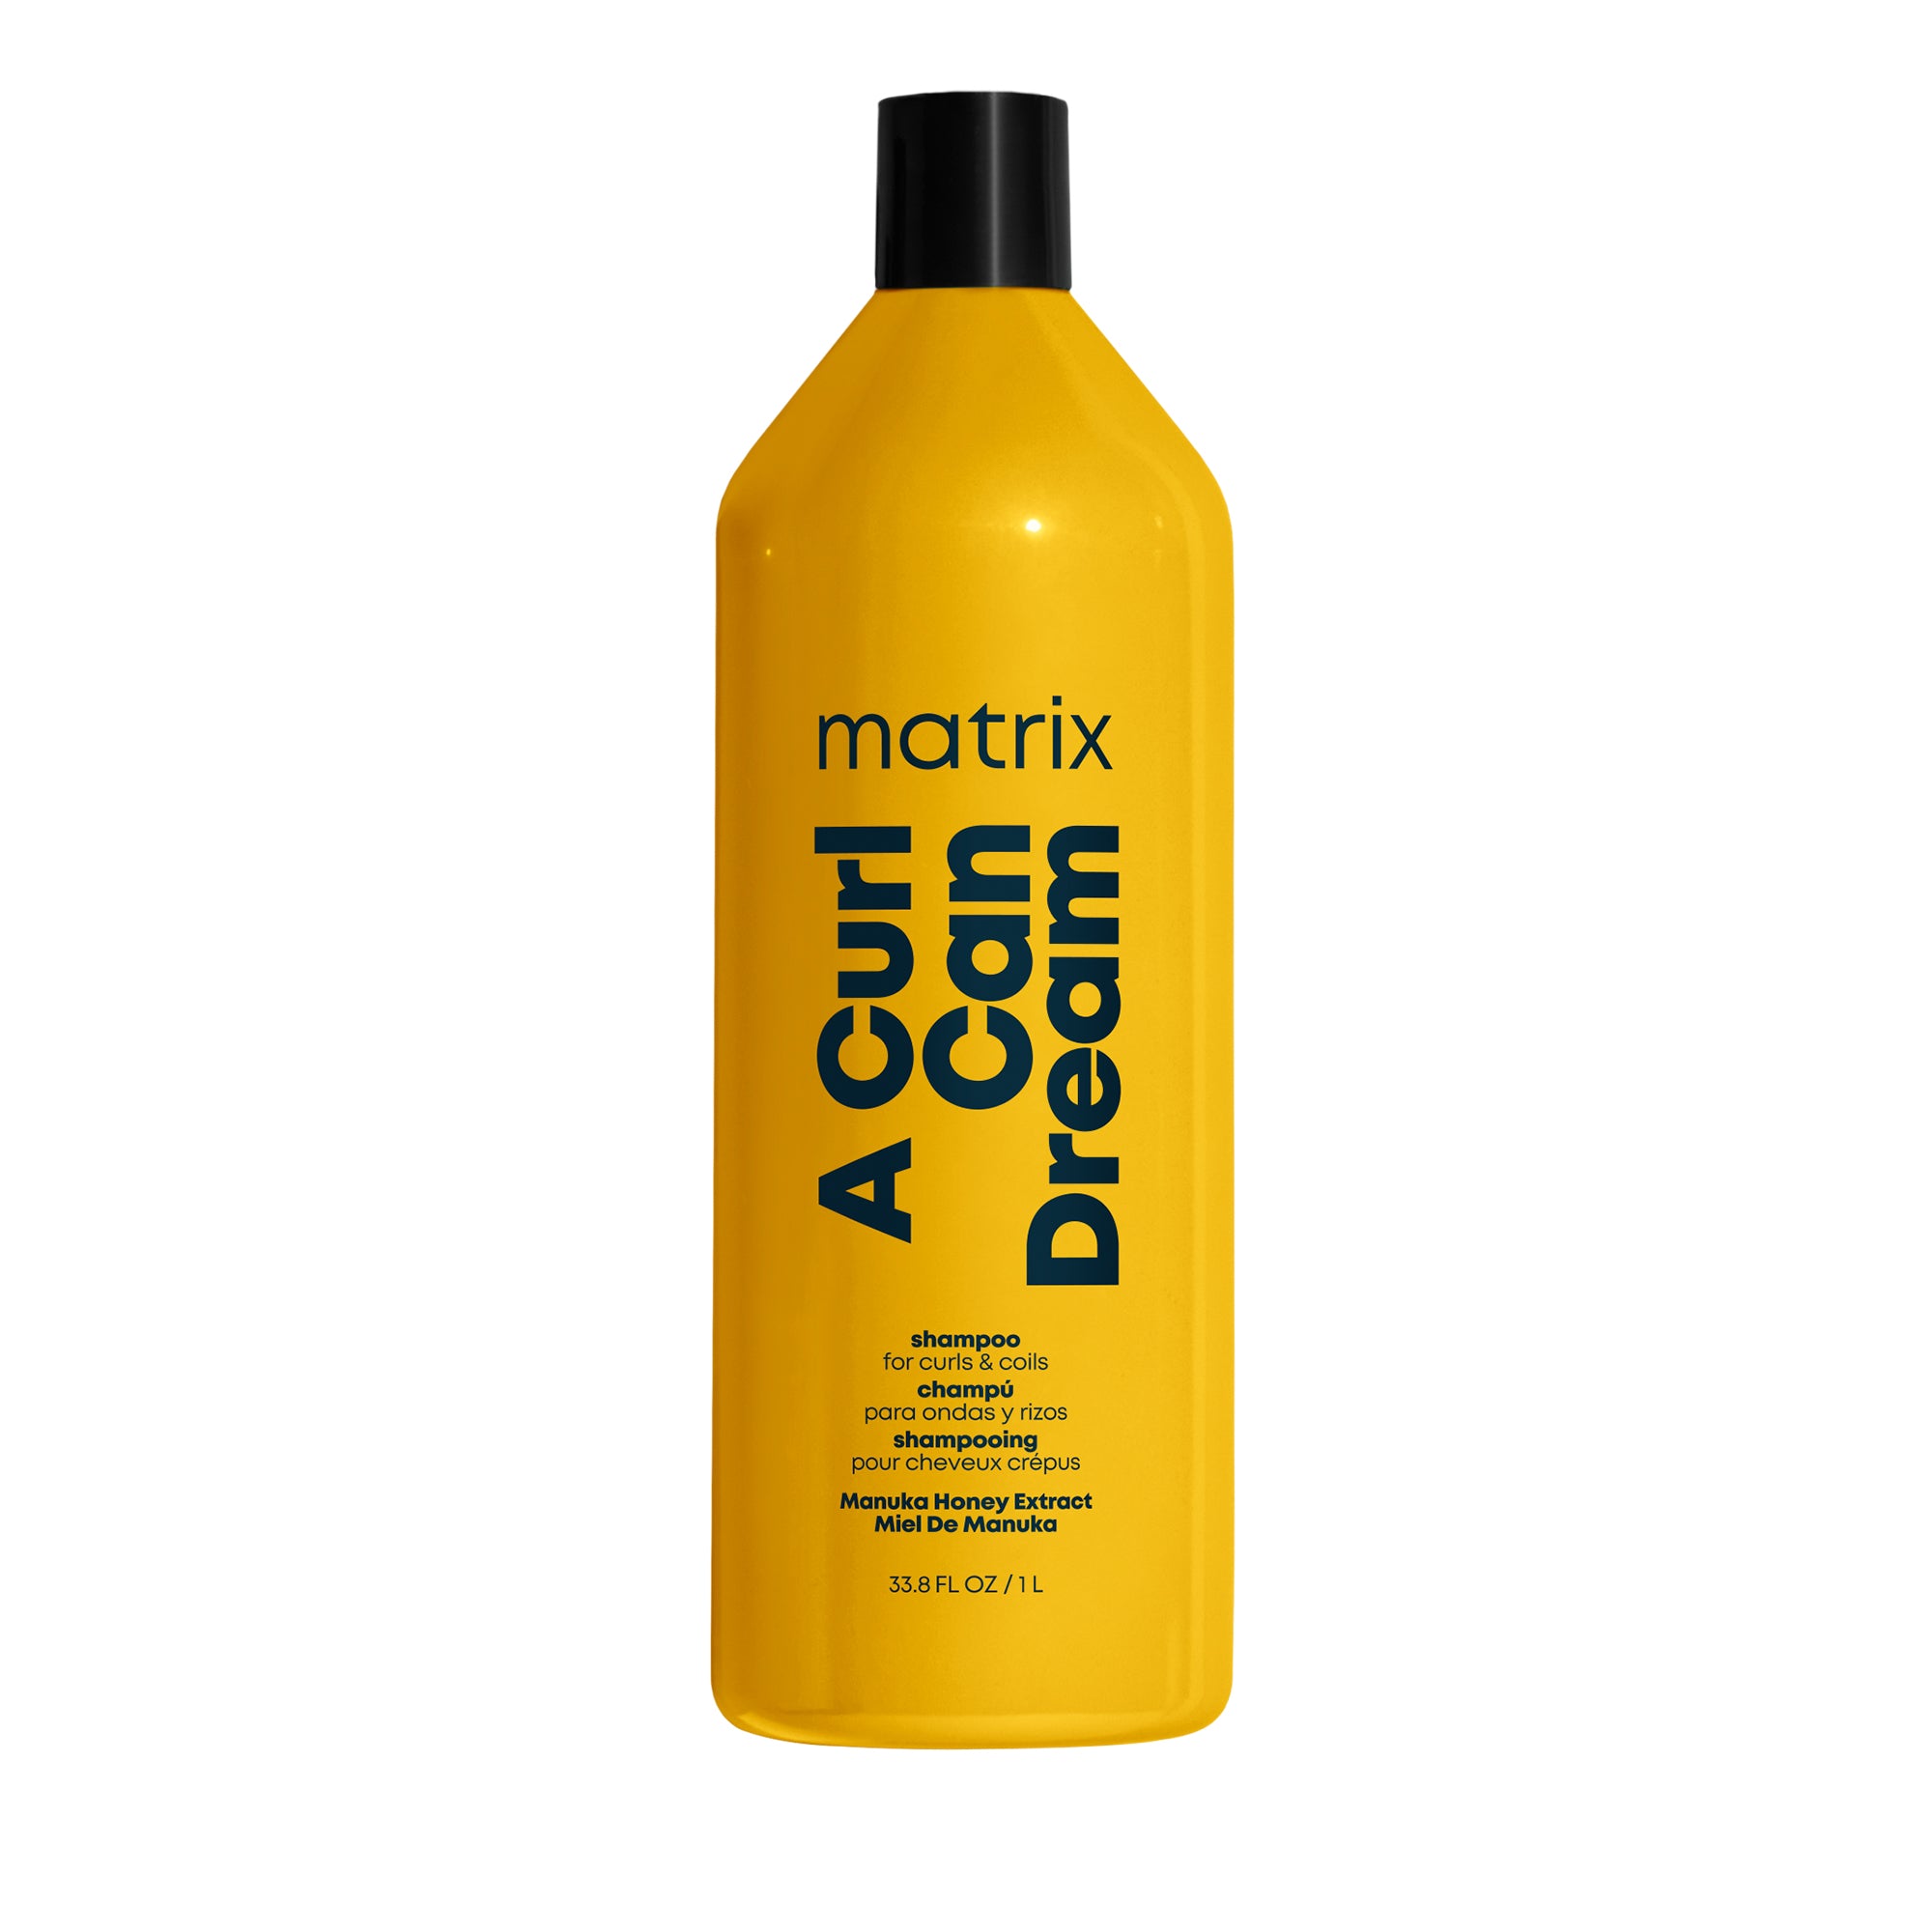 Matrix A Curl Can Dream Shampoo / 33.OZ